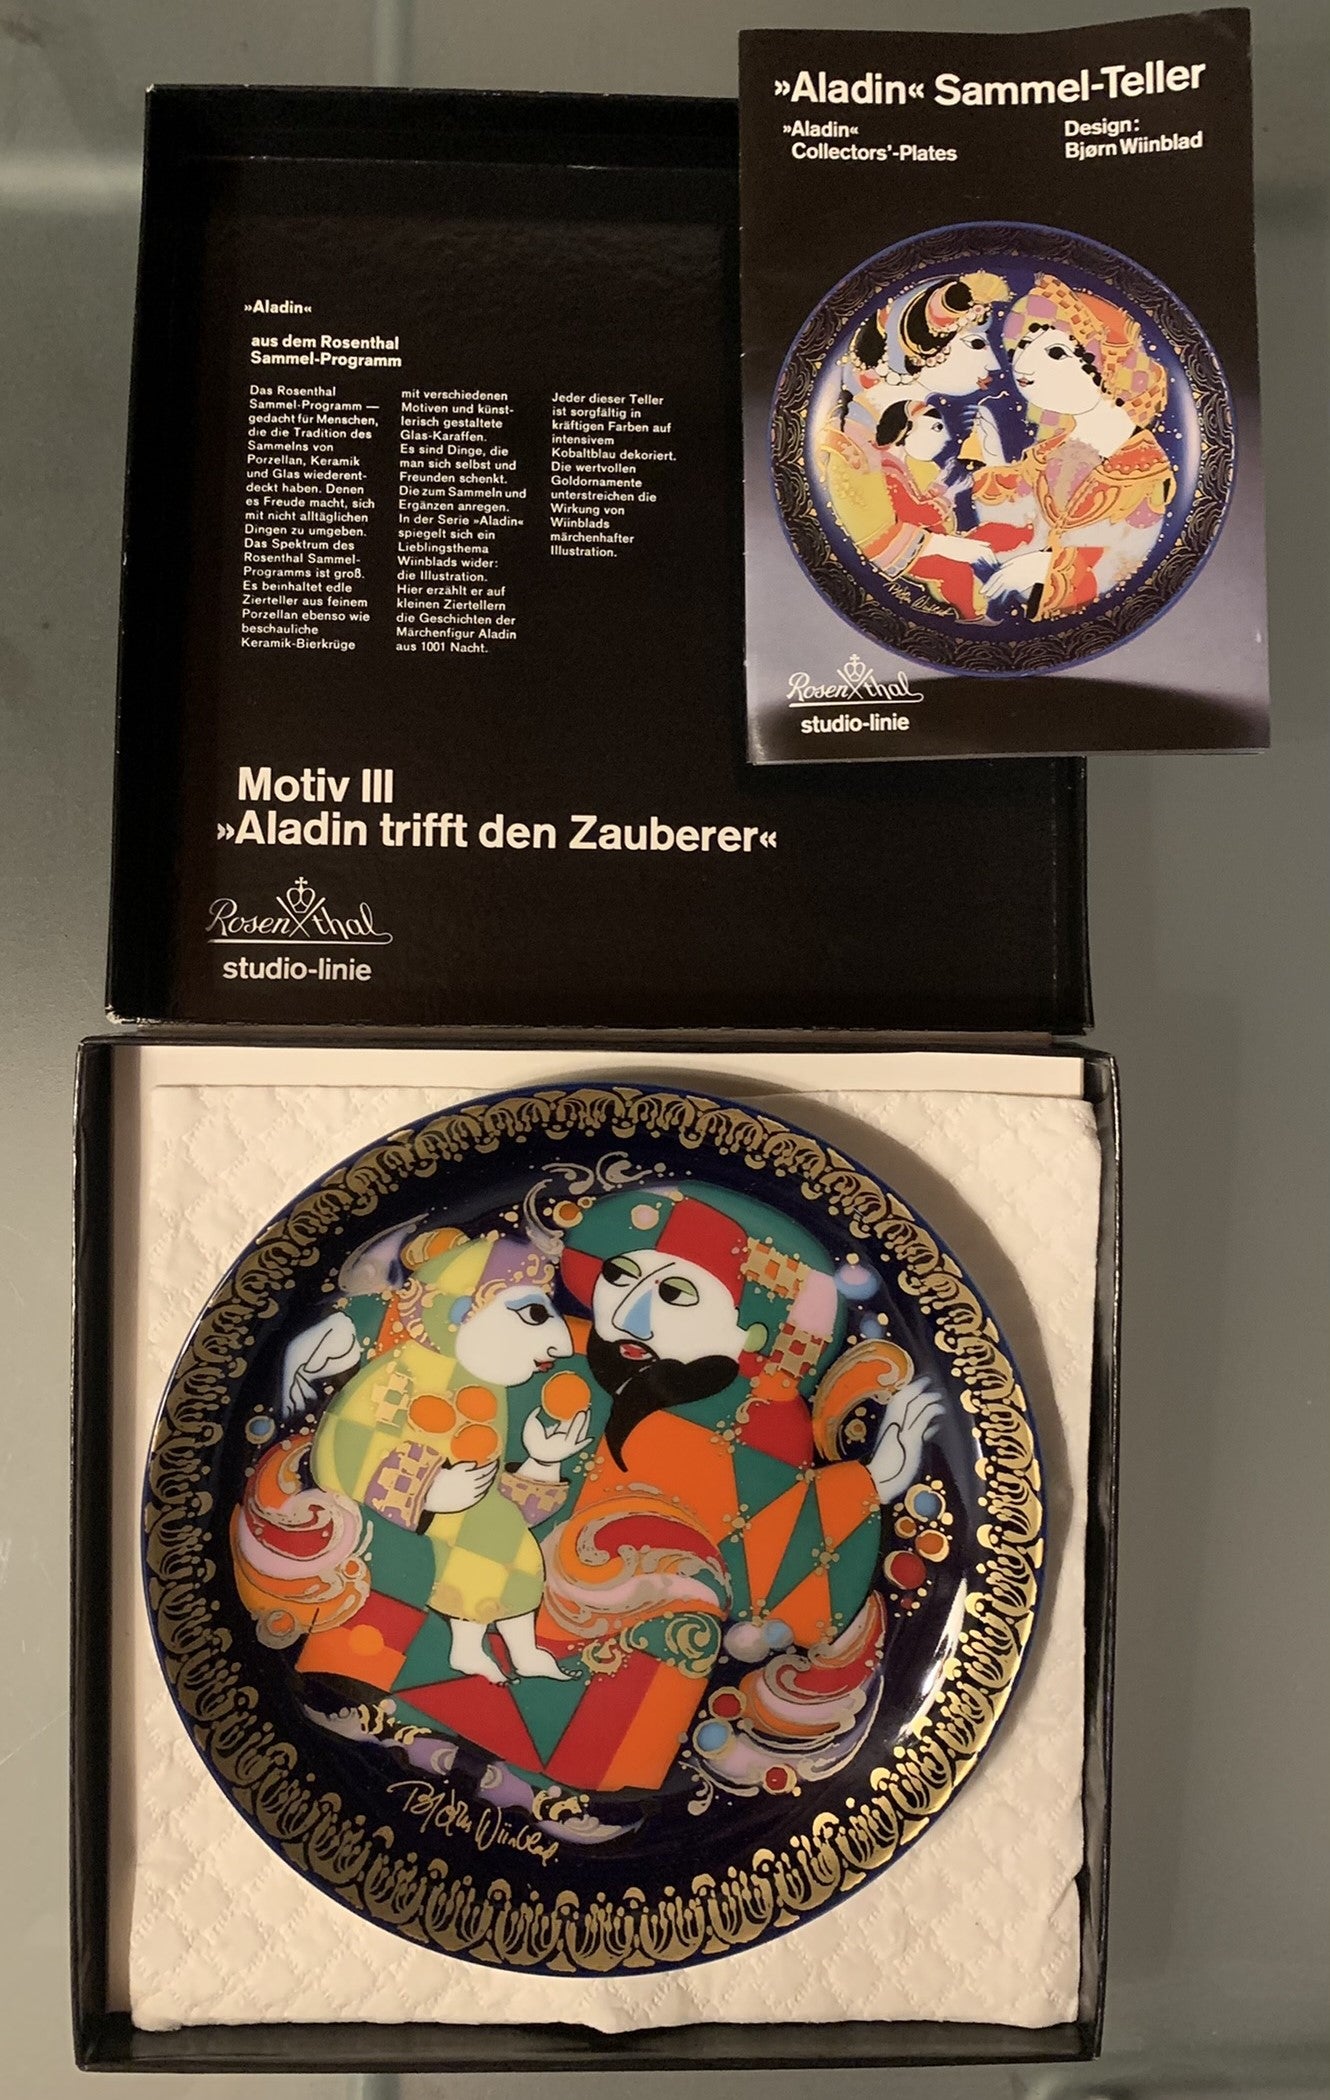 Rosenthal porcelain. Aladdin and the Magic Lamp by Danish artist Bjorn Wiinblad